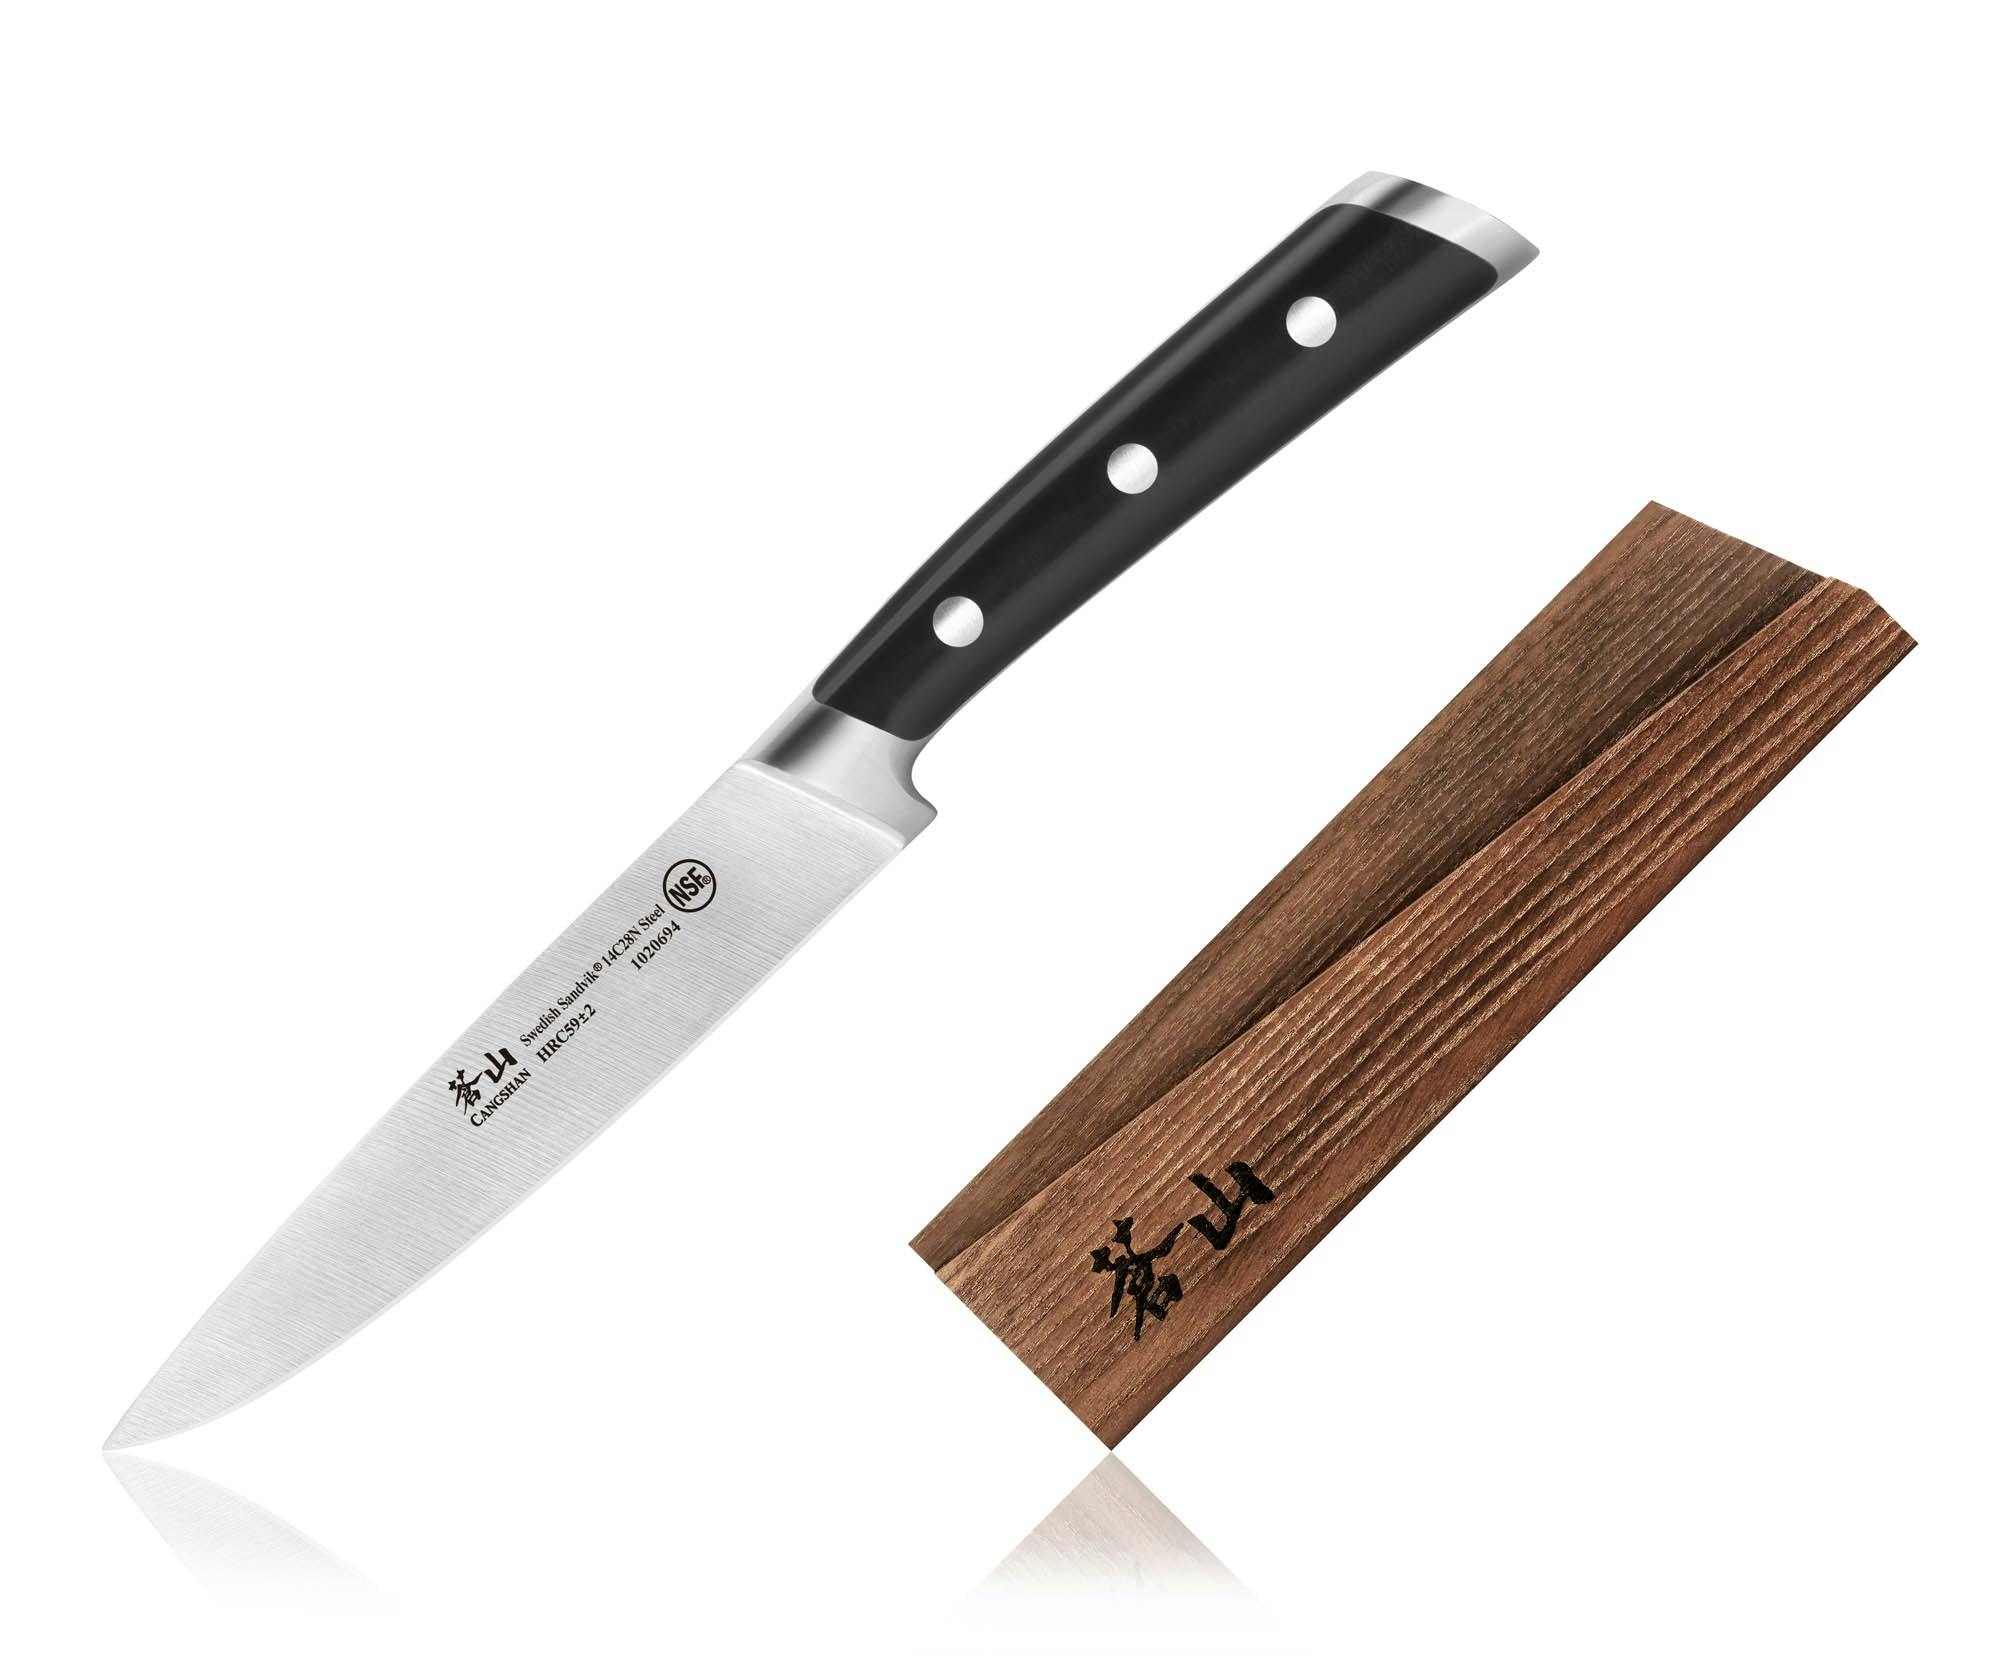 Cangshan TS Series 5" Utility Knife and Wood Sheath Set